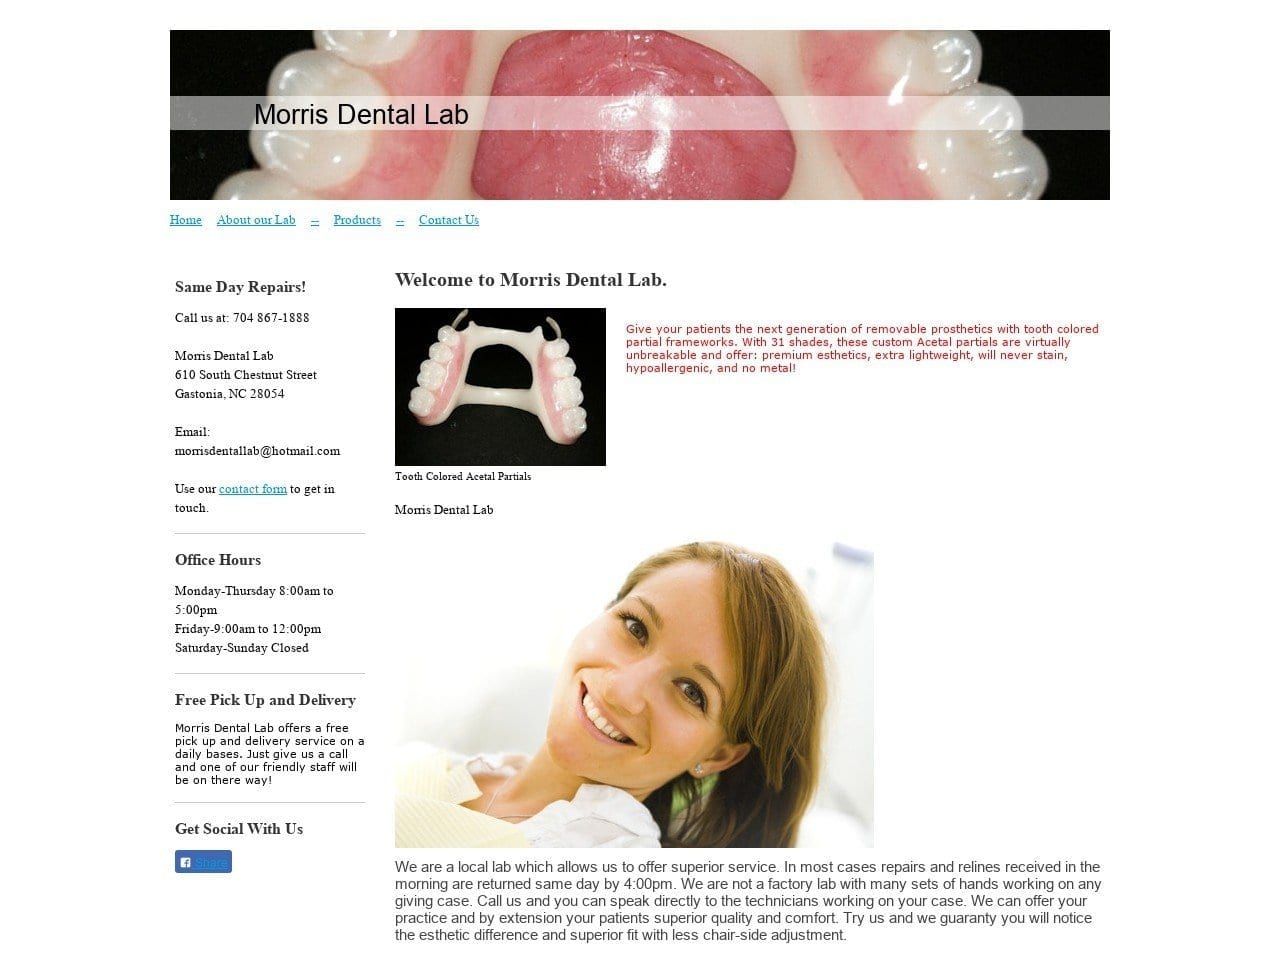 Morris Dental Lab Website Screenshot from morrisdentallab.com